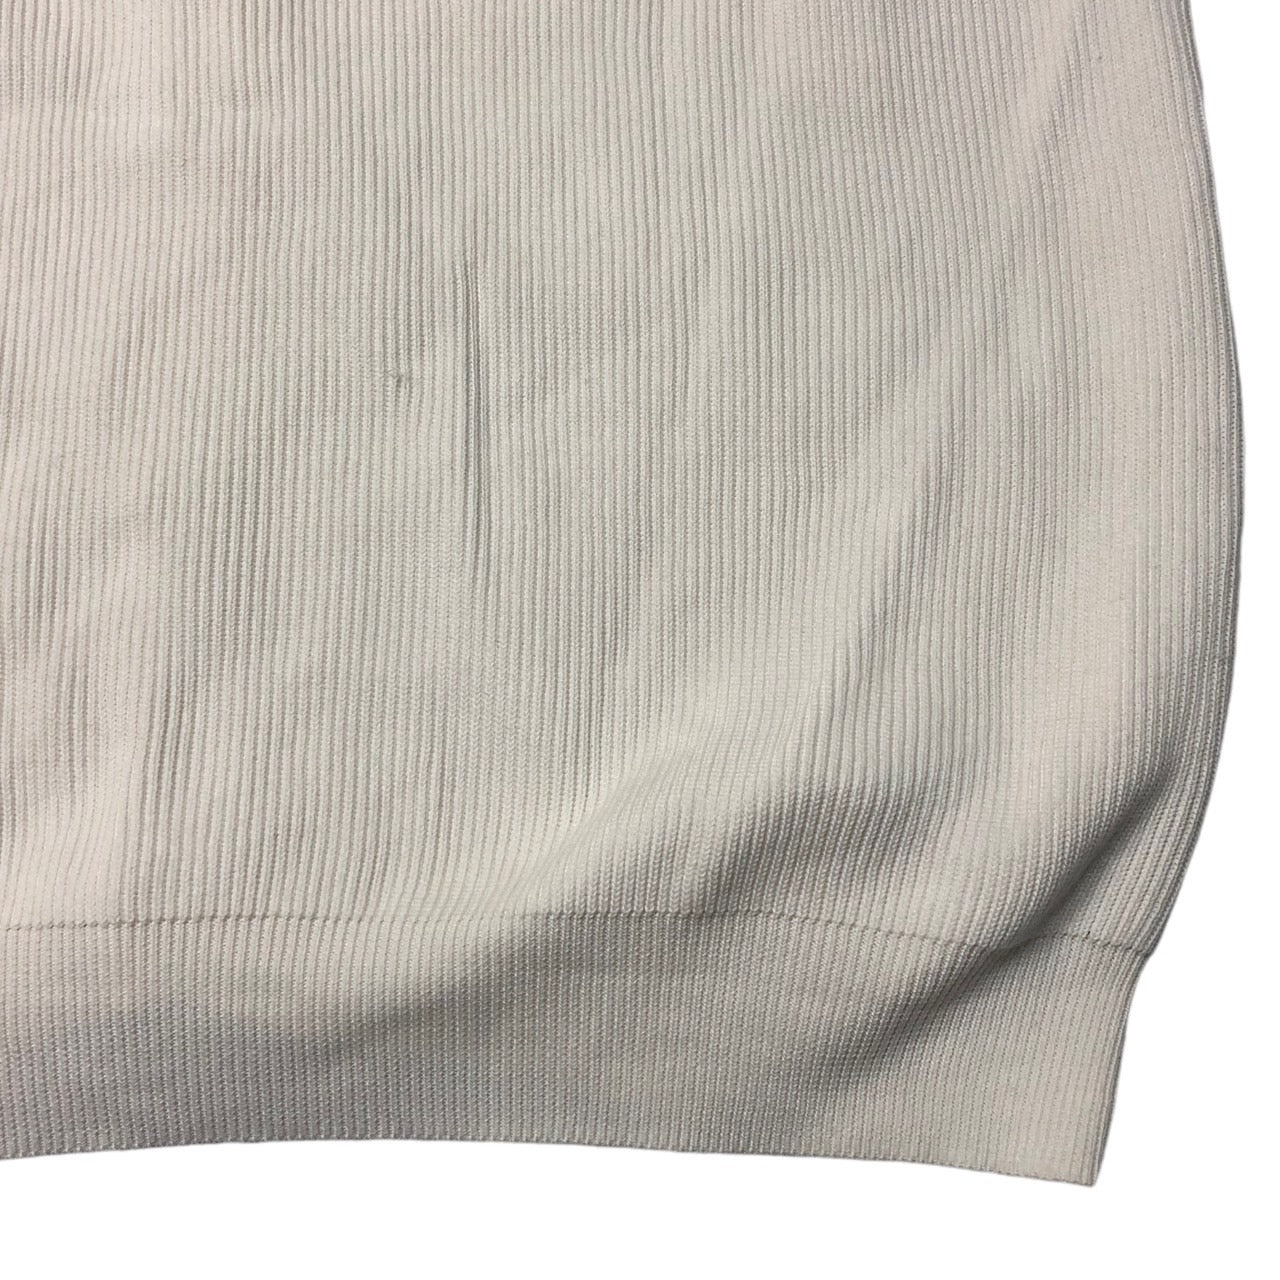 Graphpaper(グラフペーパー) High Density Cotton Knit Cardigan/高